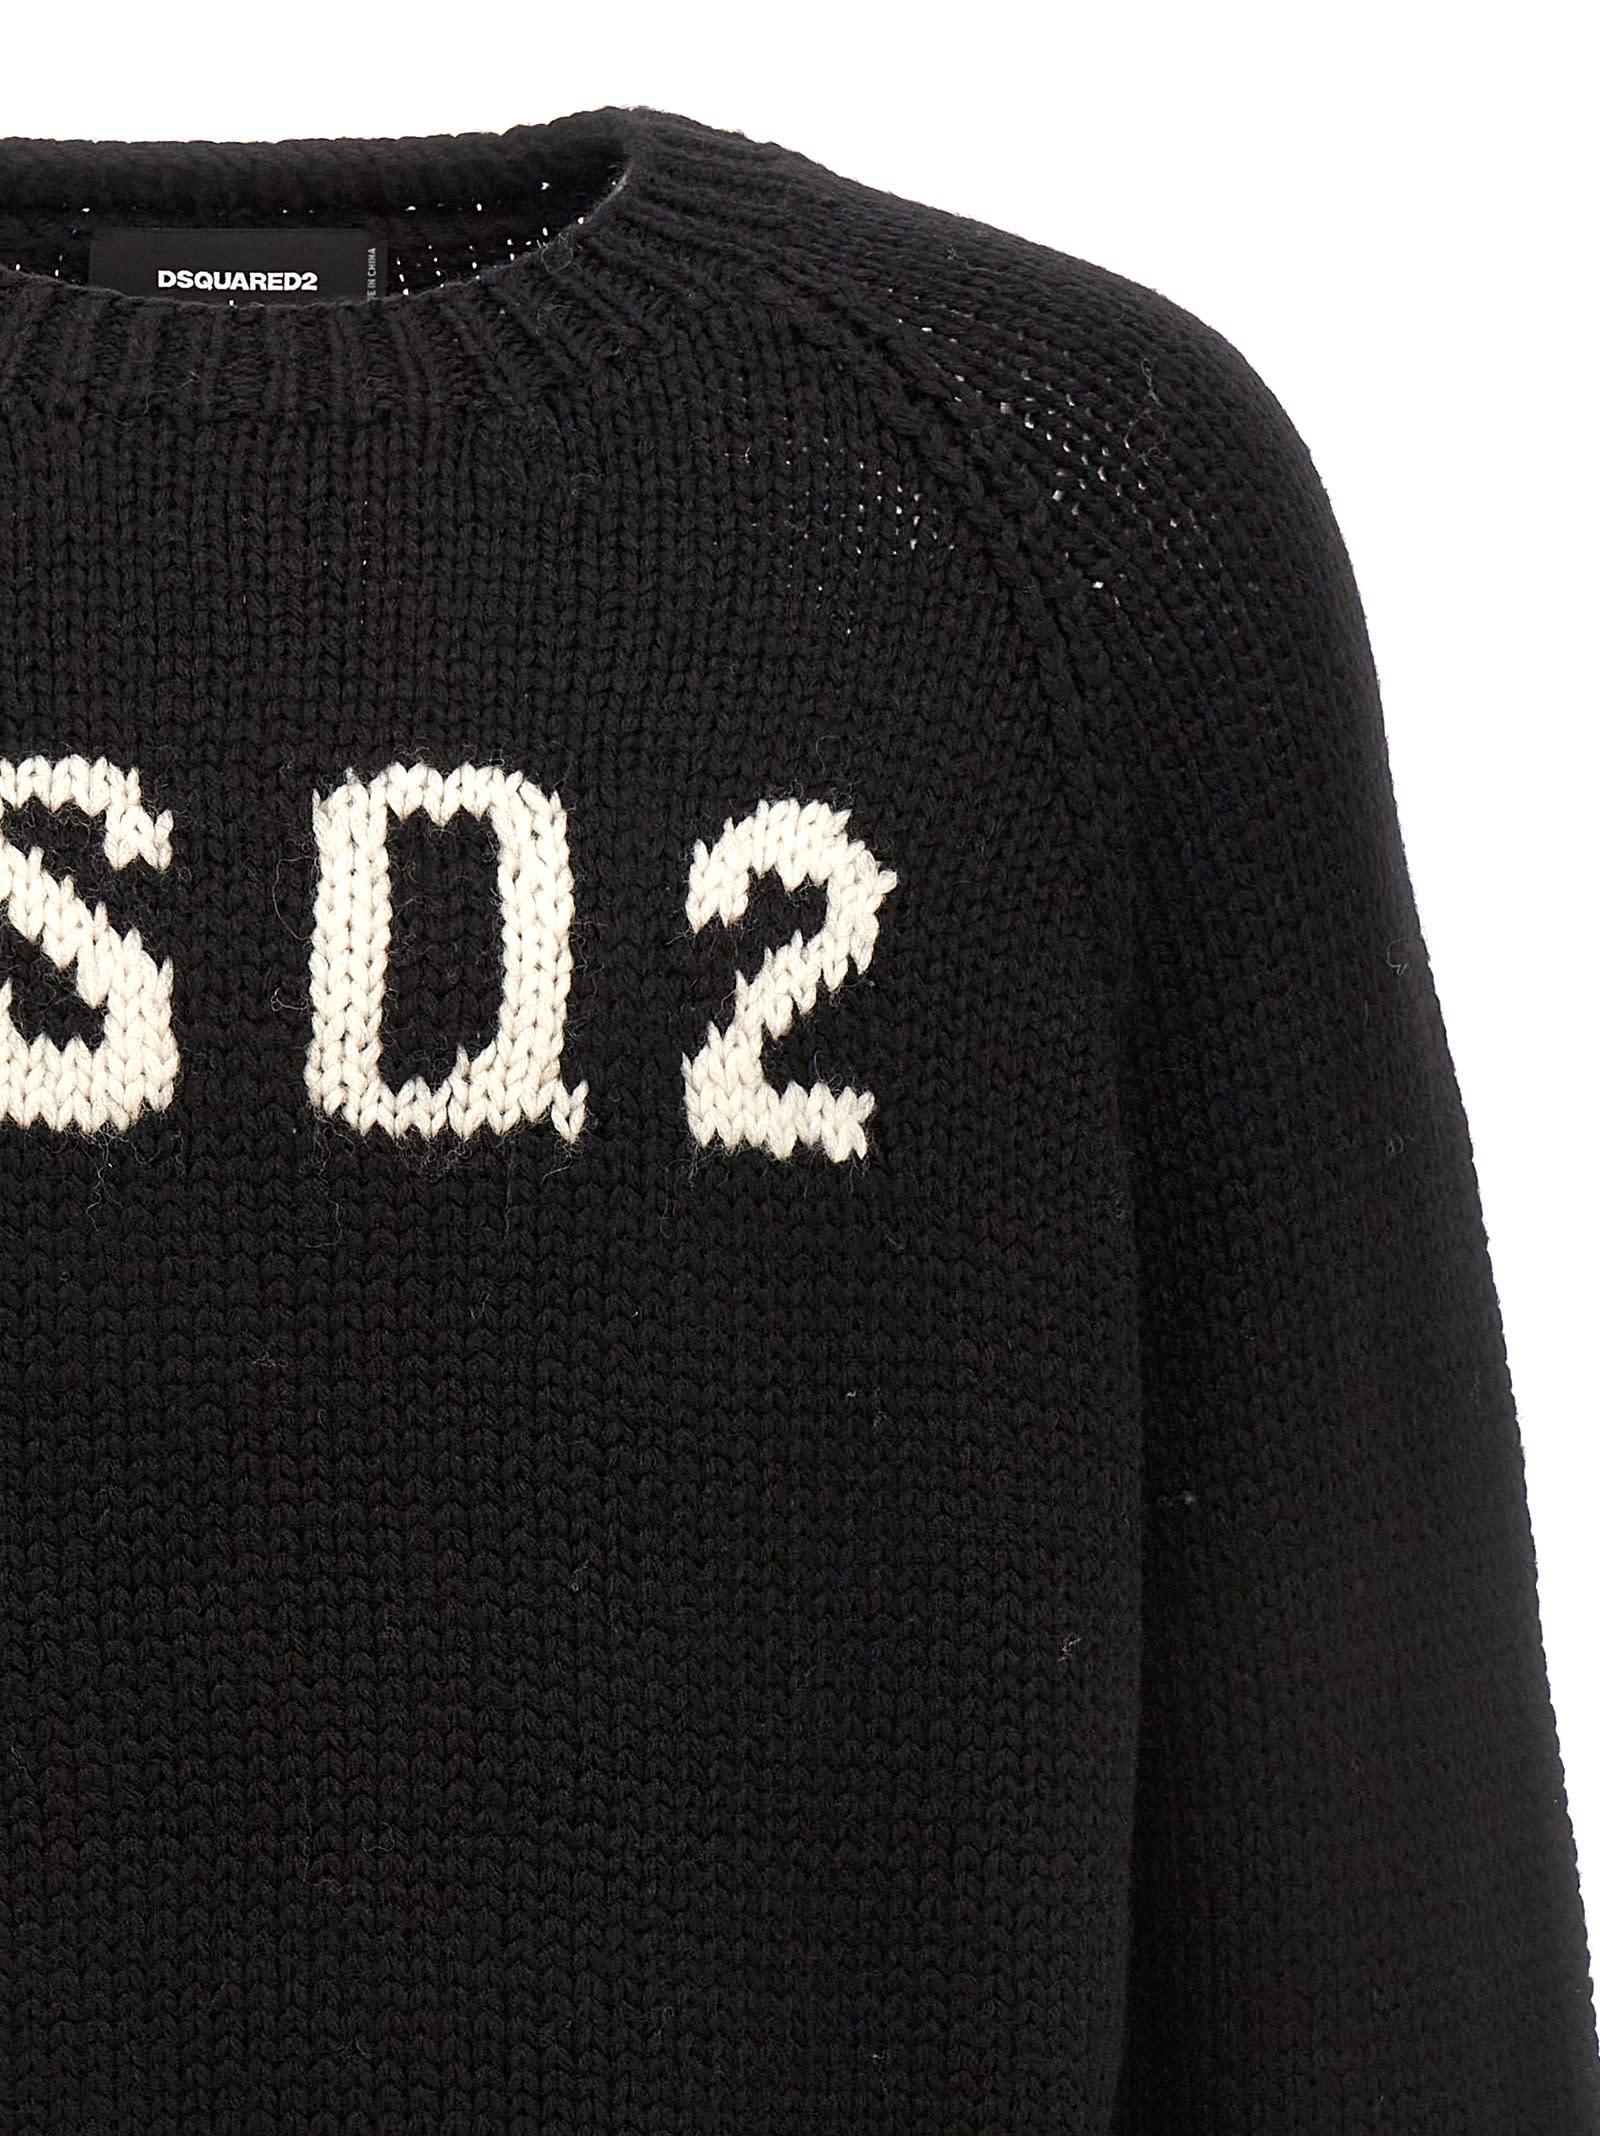 Dsquared2 Men's Ciro Sweater